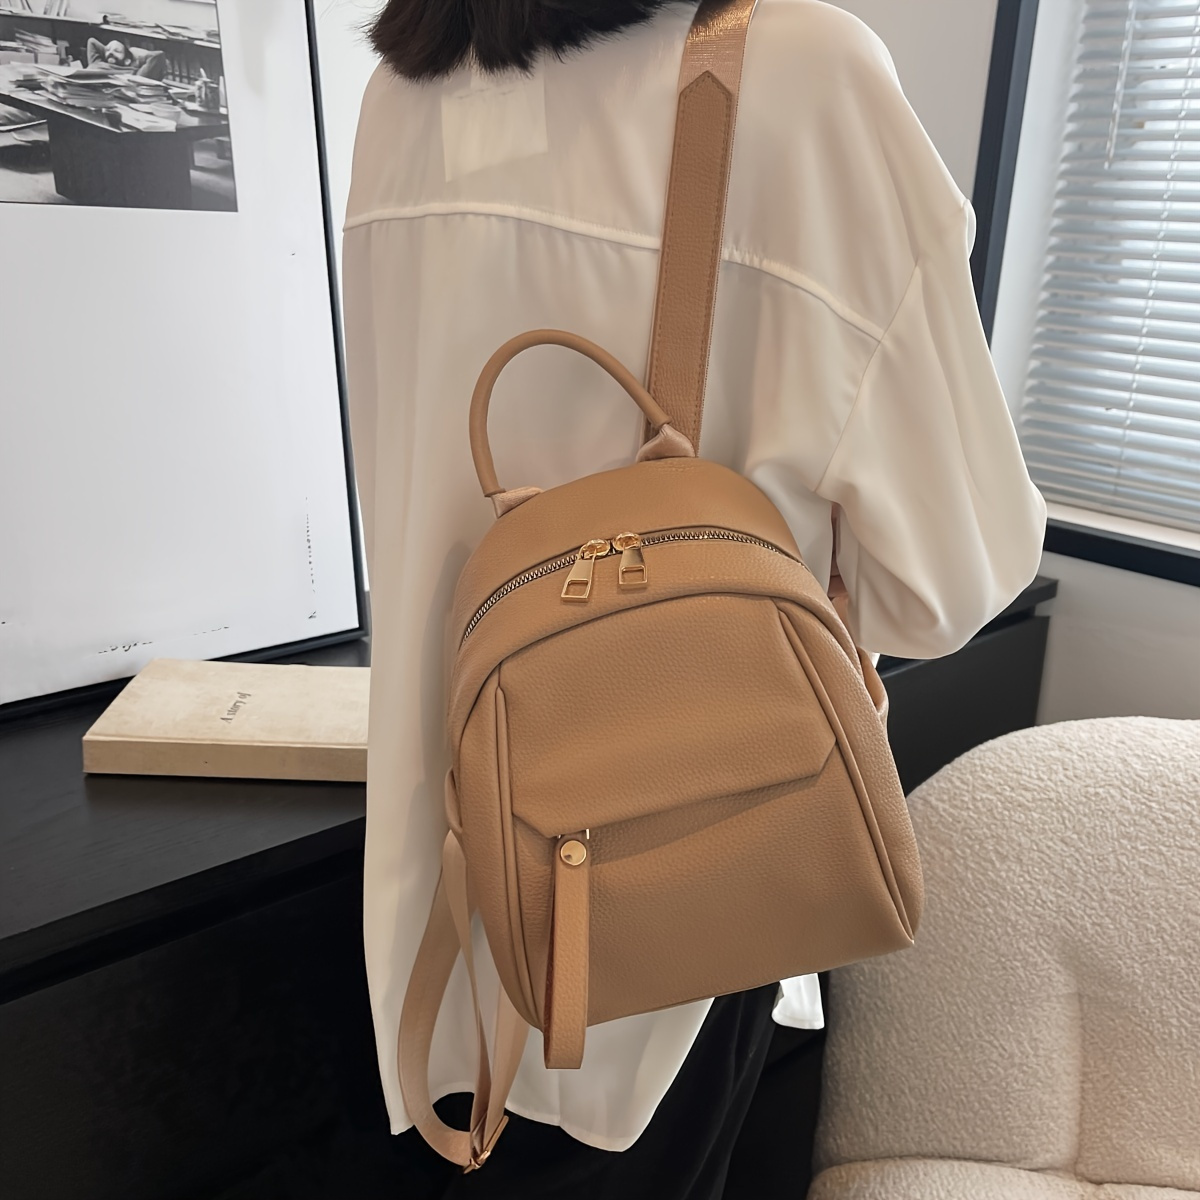 MFX beige fashion backpack